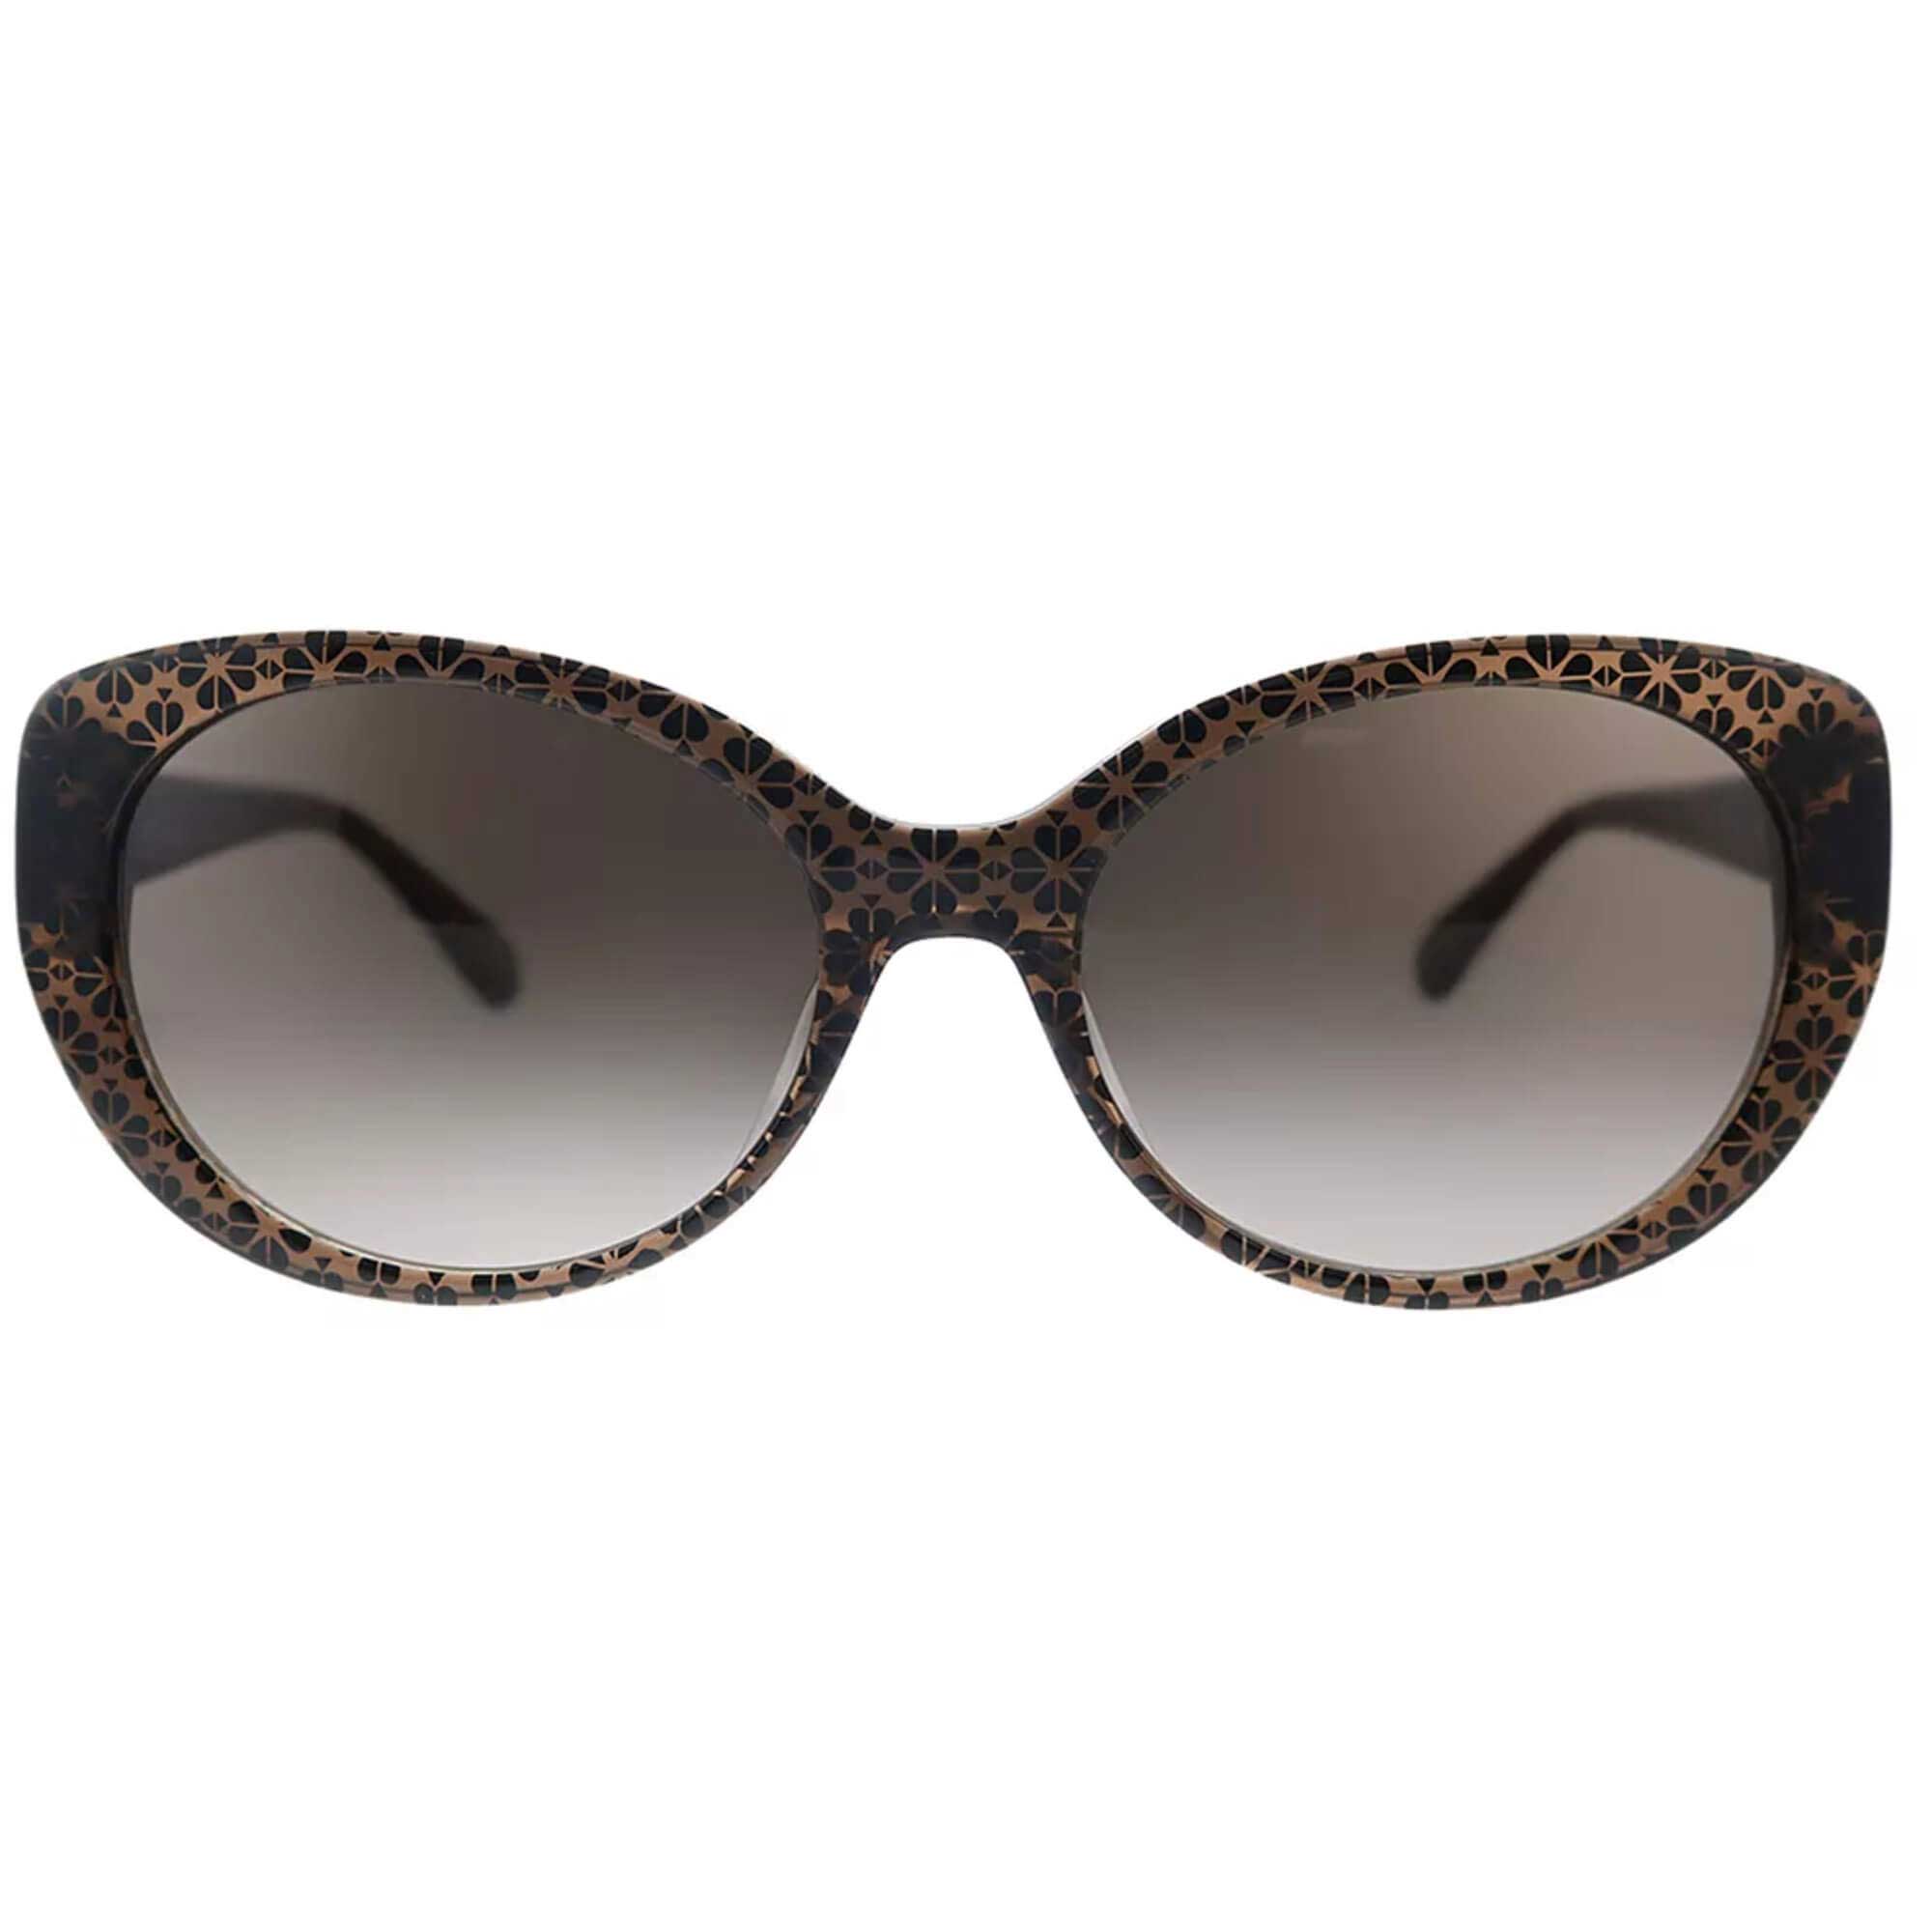 Kate Spade EVERETT F/S 04Q8 Women's Cat Eye Frame Fashion Sunglasses - image 2 of 3